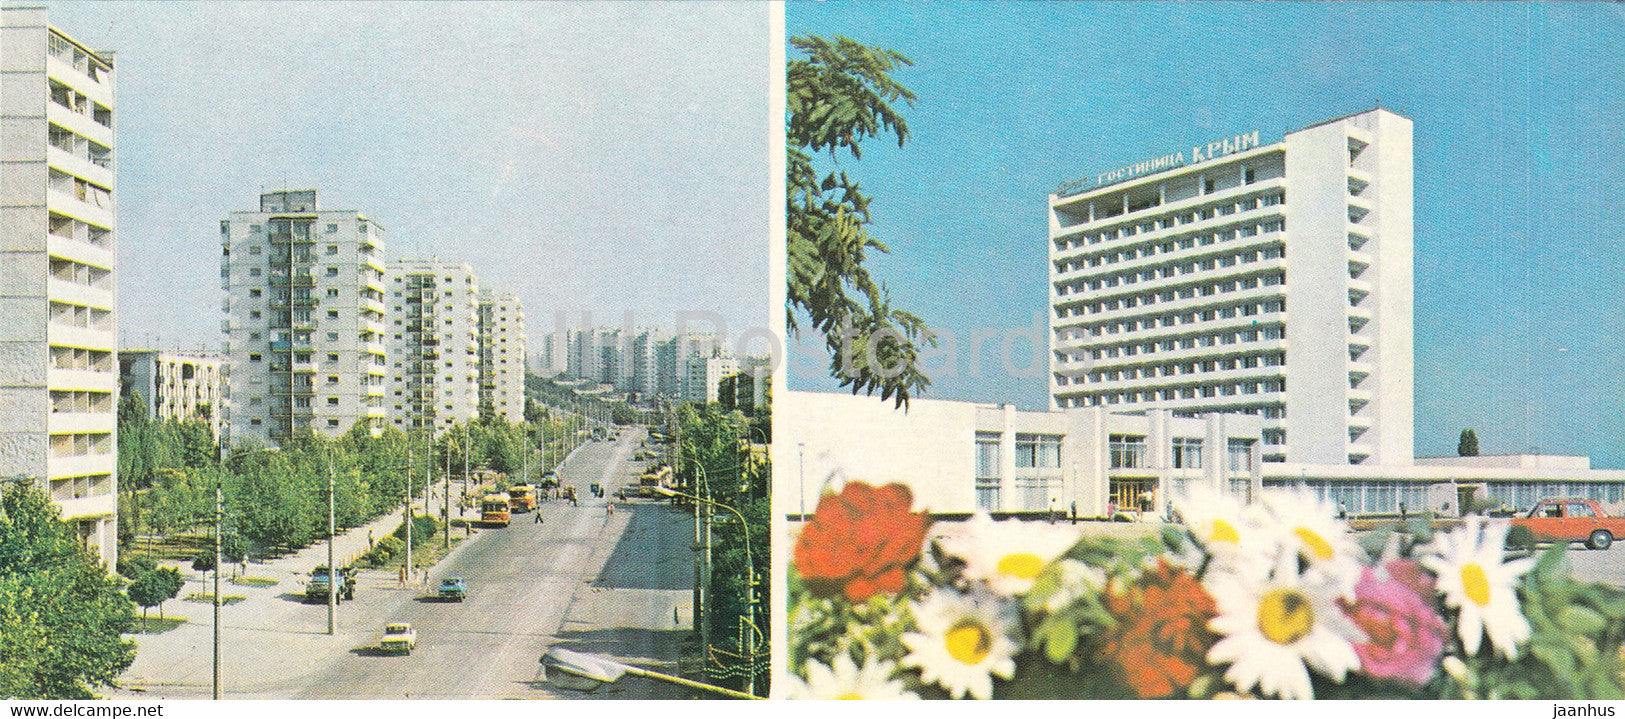 Sevastopol - general Ostryakov prospekt - avenue - hotel Krym - Crimea - 1980 - Ukraine USSR - unused - JH Postcards